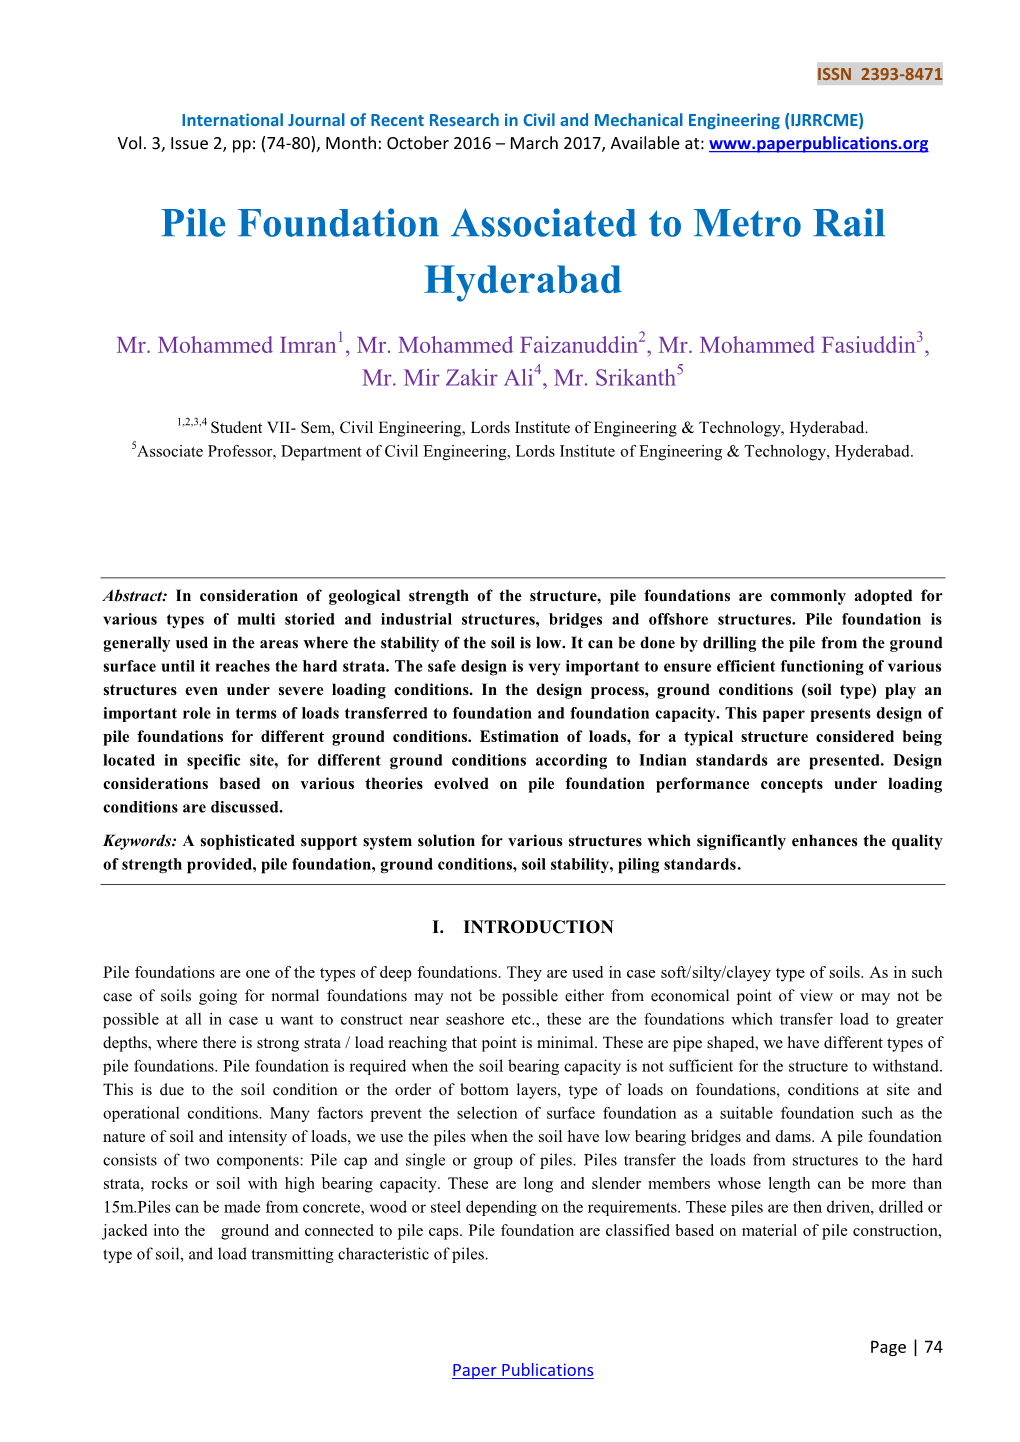 Pile Foundation Associated to Metro Rail Hyderabad